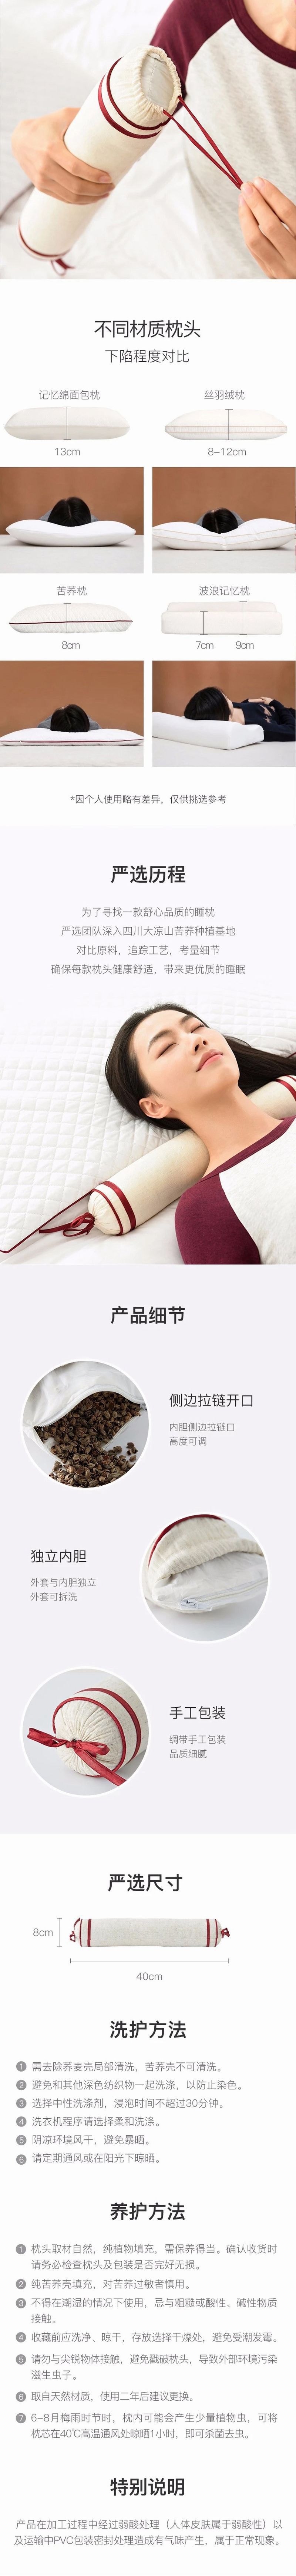 Round neck protector tartary buckwheat pillow adjustable [5-7 Days U.S. Shipping]